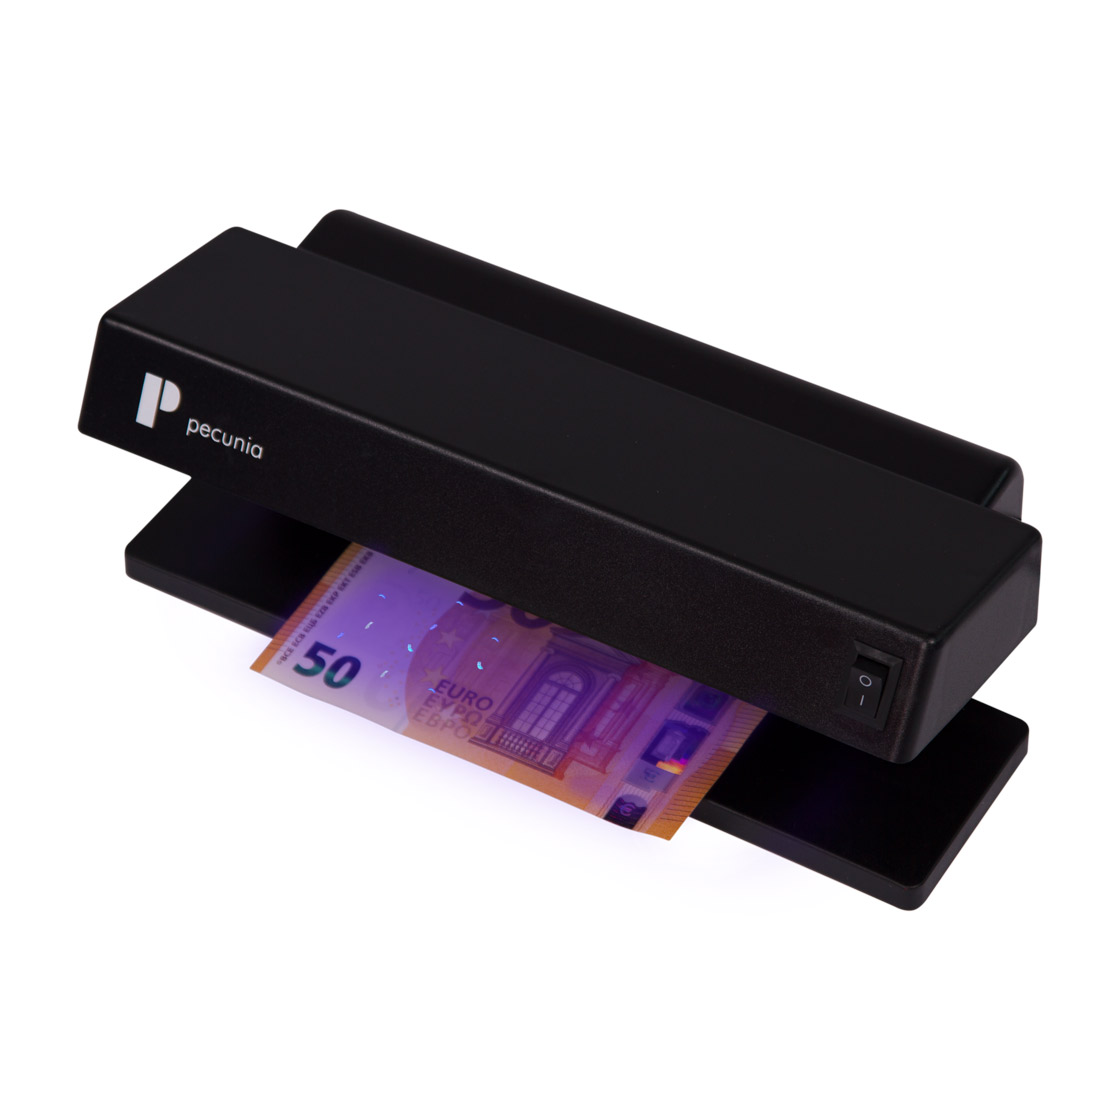 Counterfeit detector Pecunia UV 565